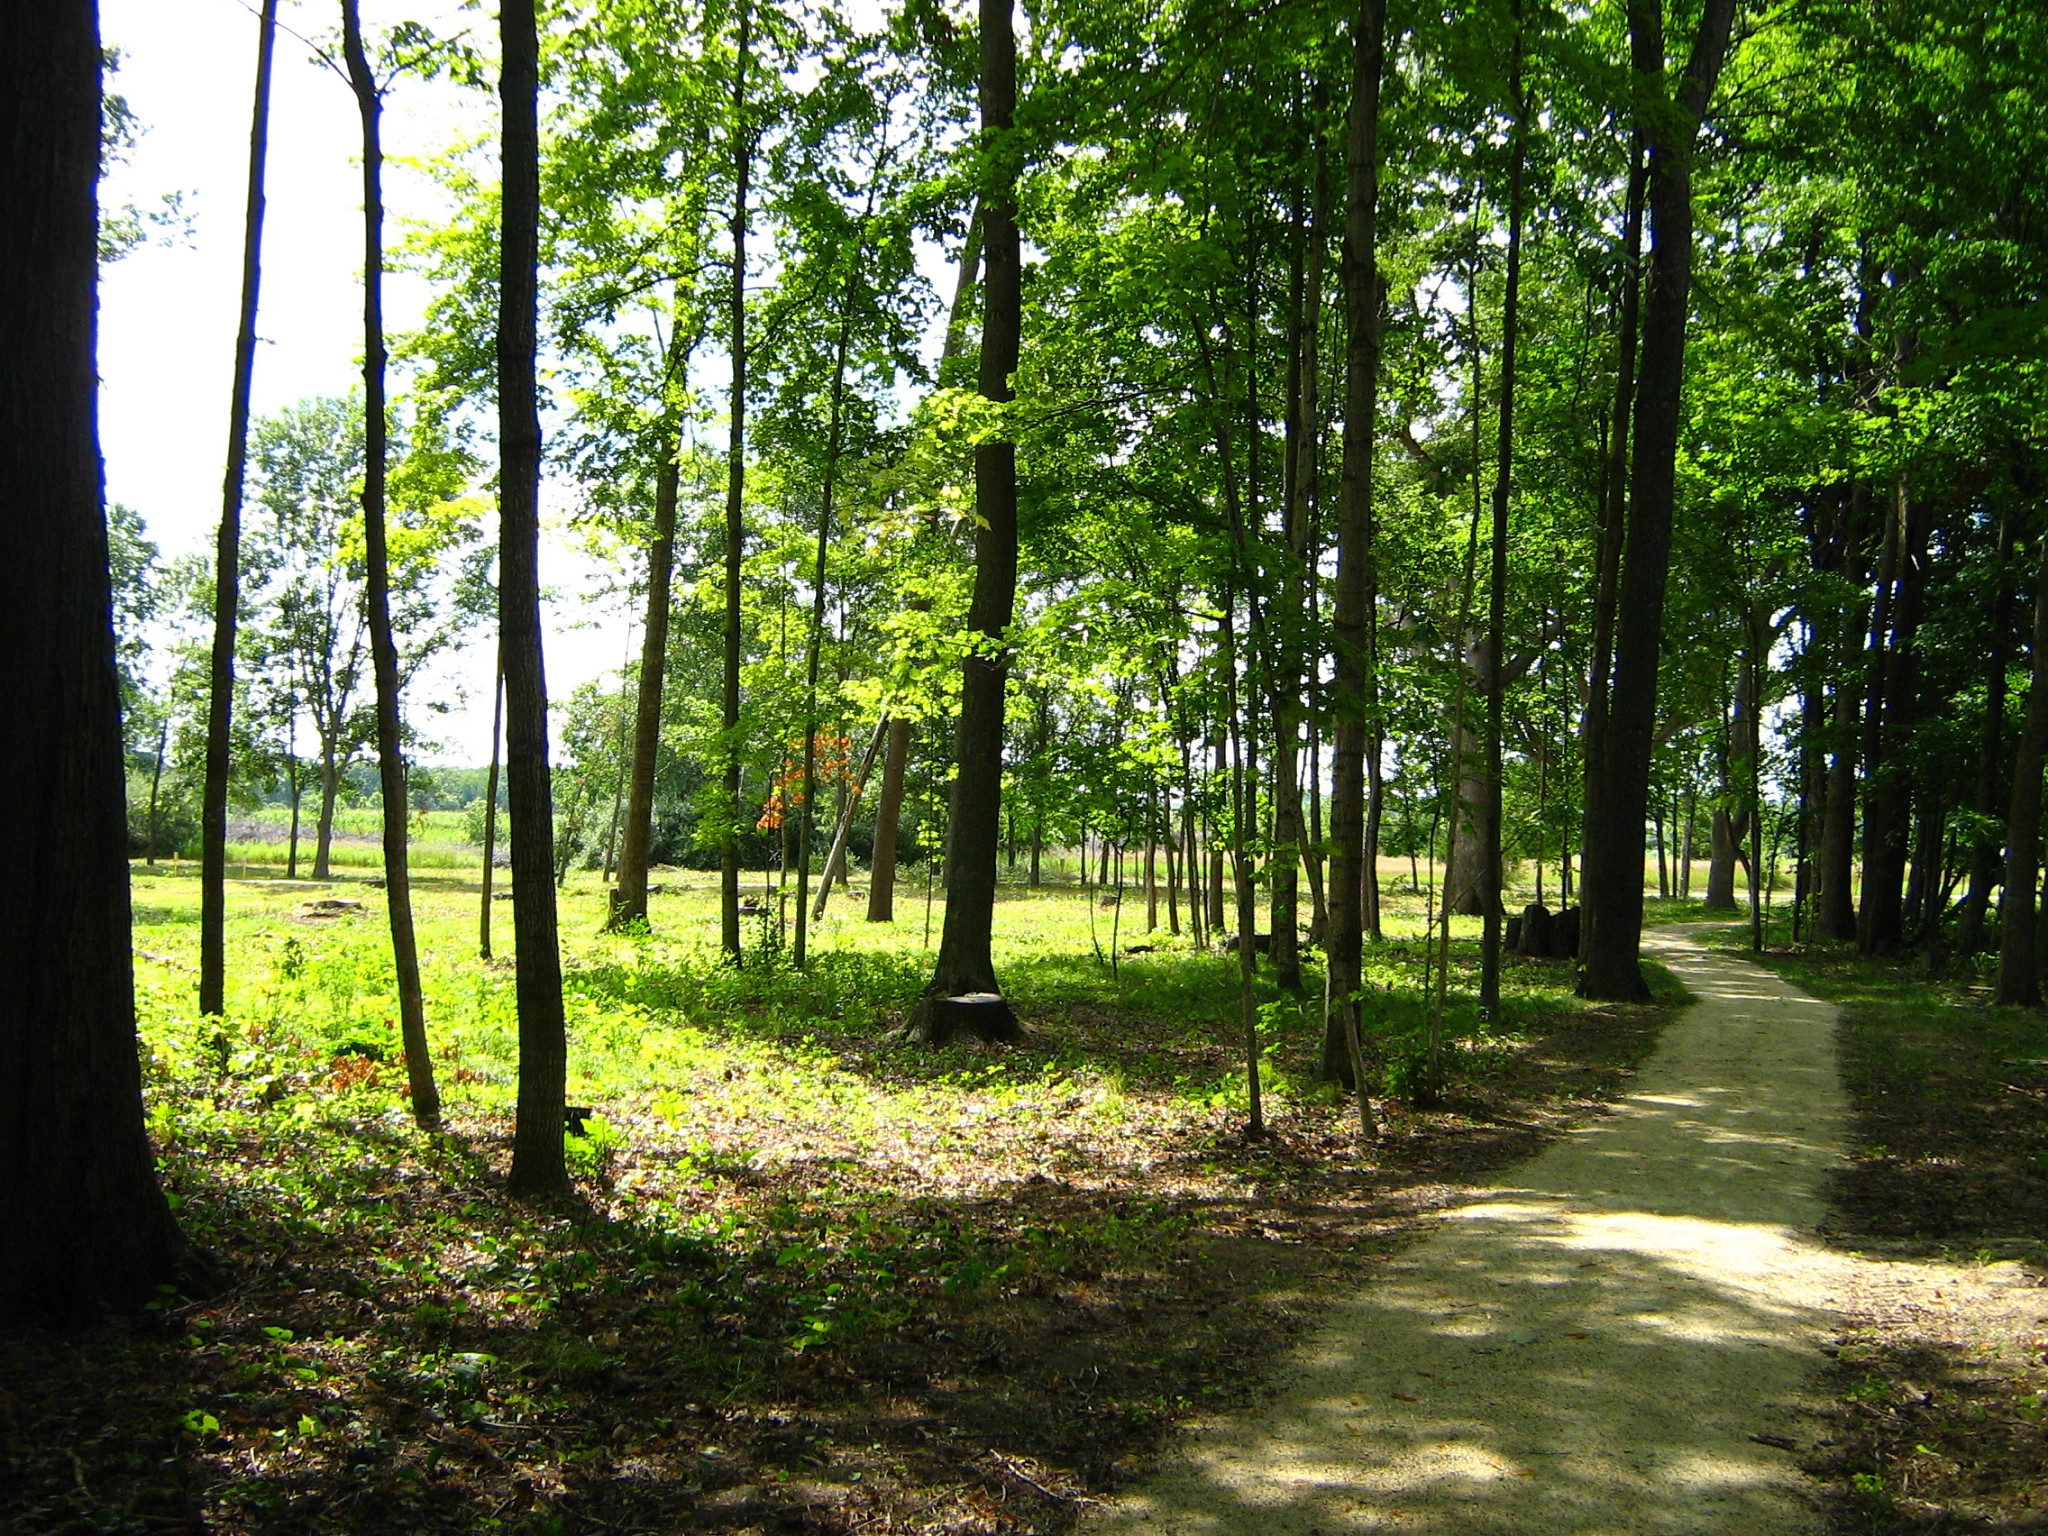 Lizard Mound Park in Farmington